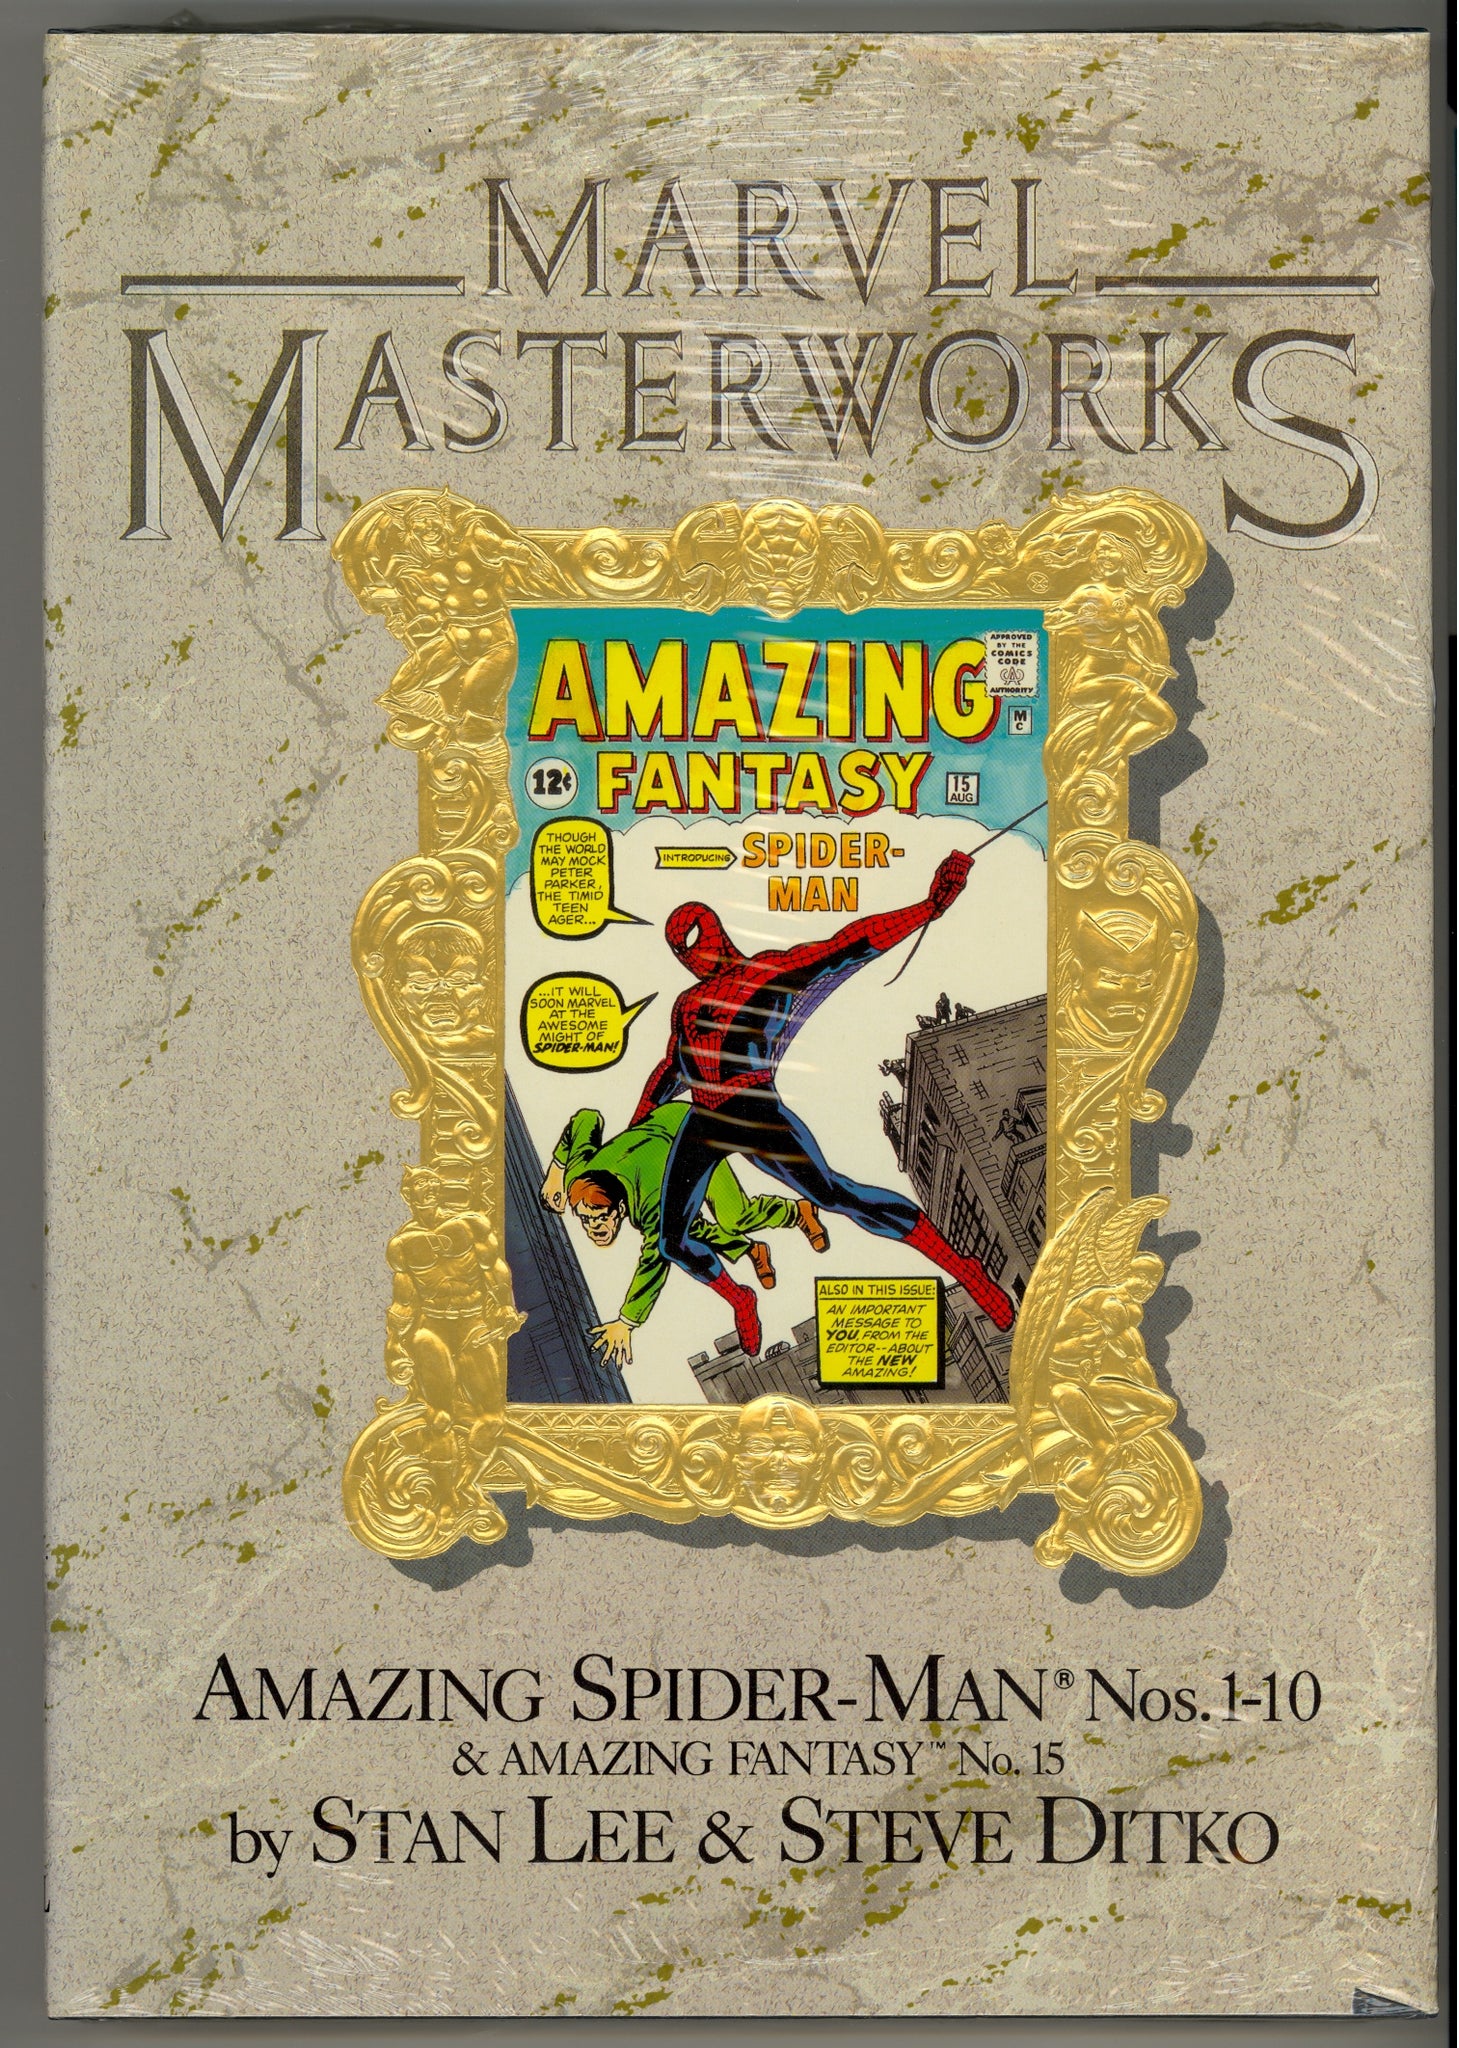 Marvel Masterworks volume 1 Amazing Fantasy 15, Amazing Spider-Man issues 1-10 - 1st printing